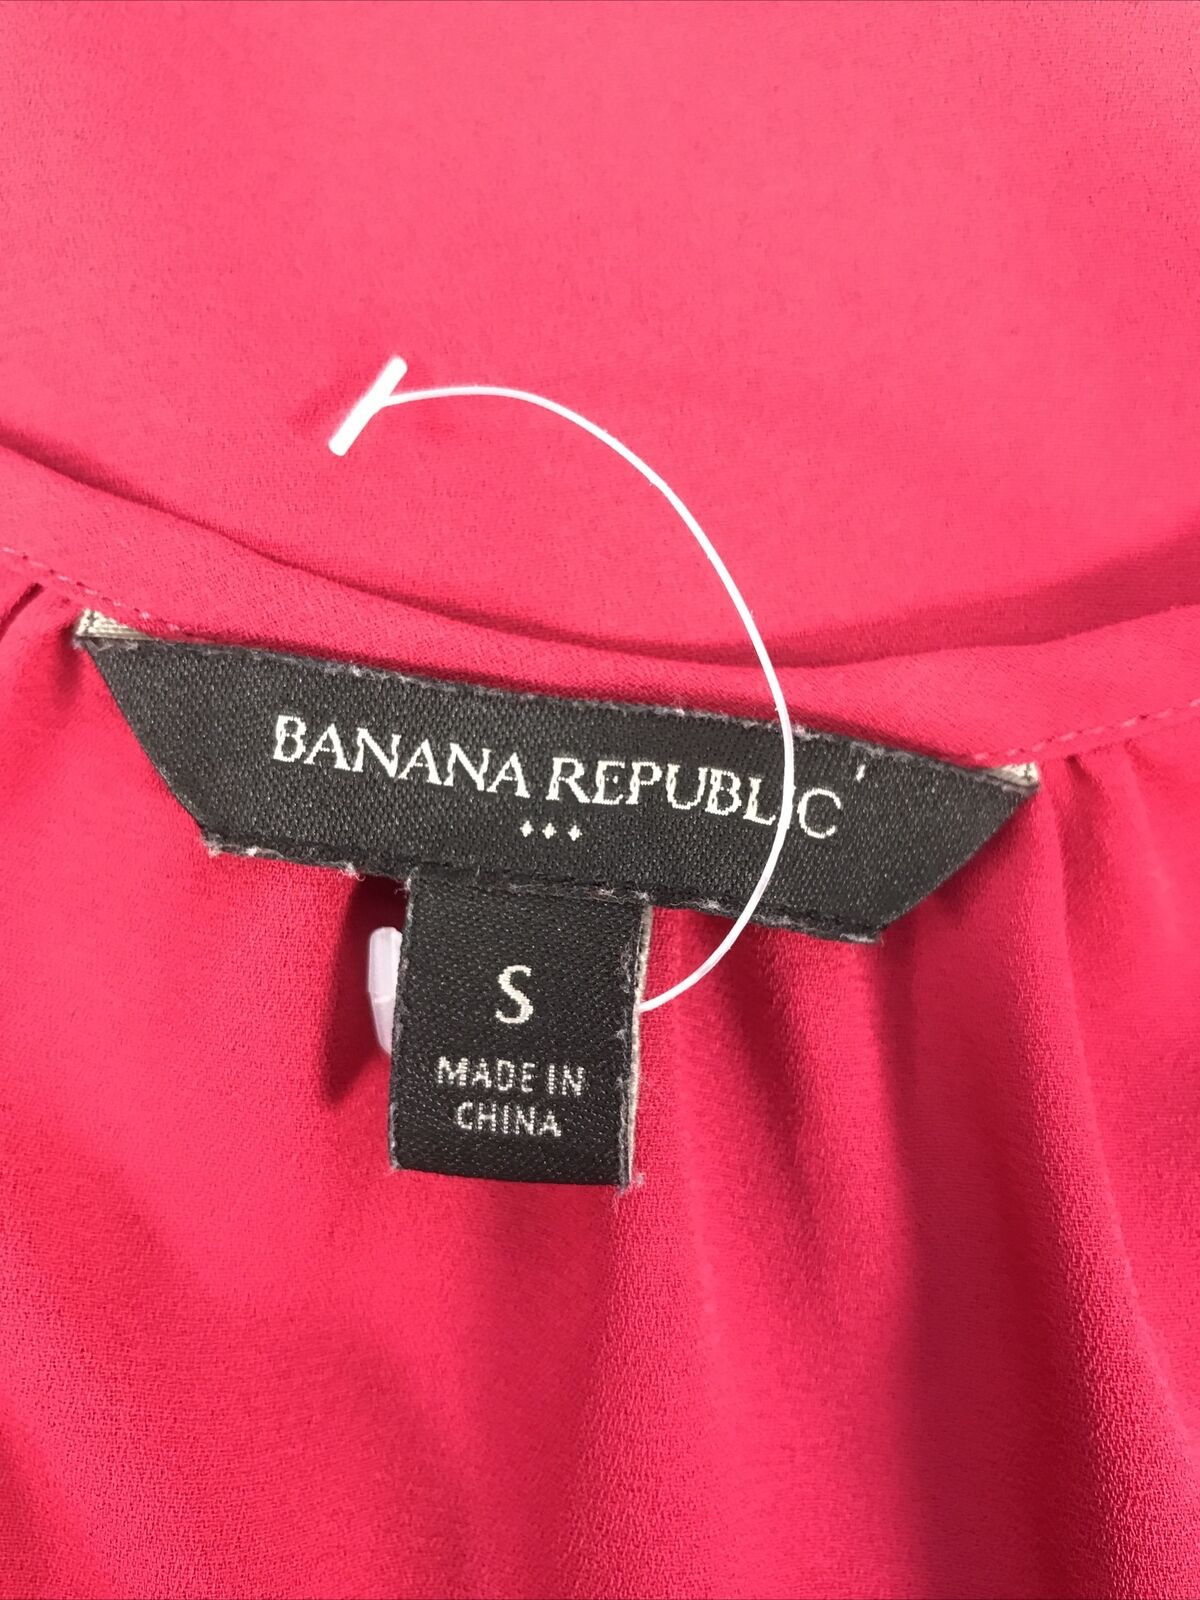 Banana Republic Women's Pink Sleeveless Blouse Top Sz S